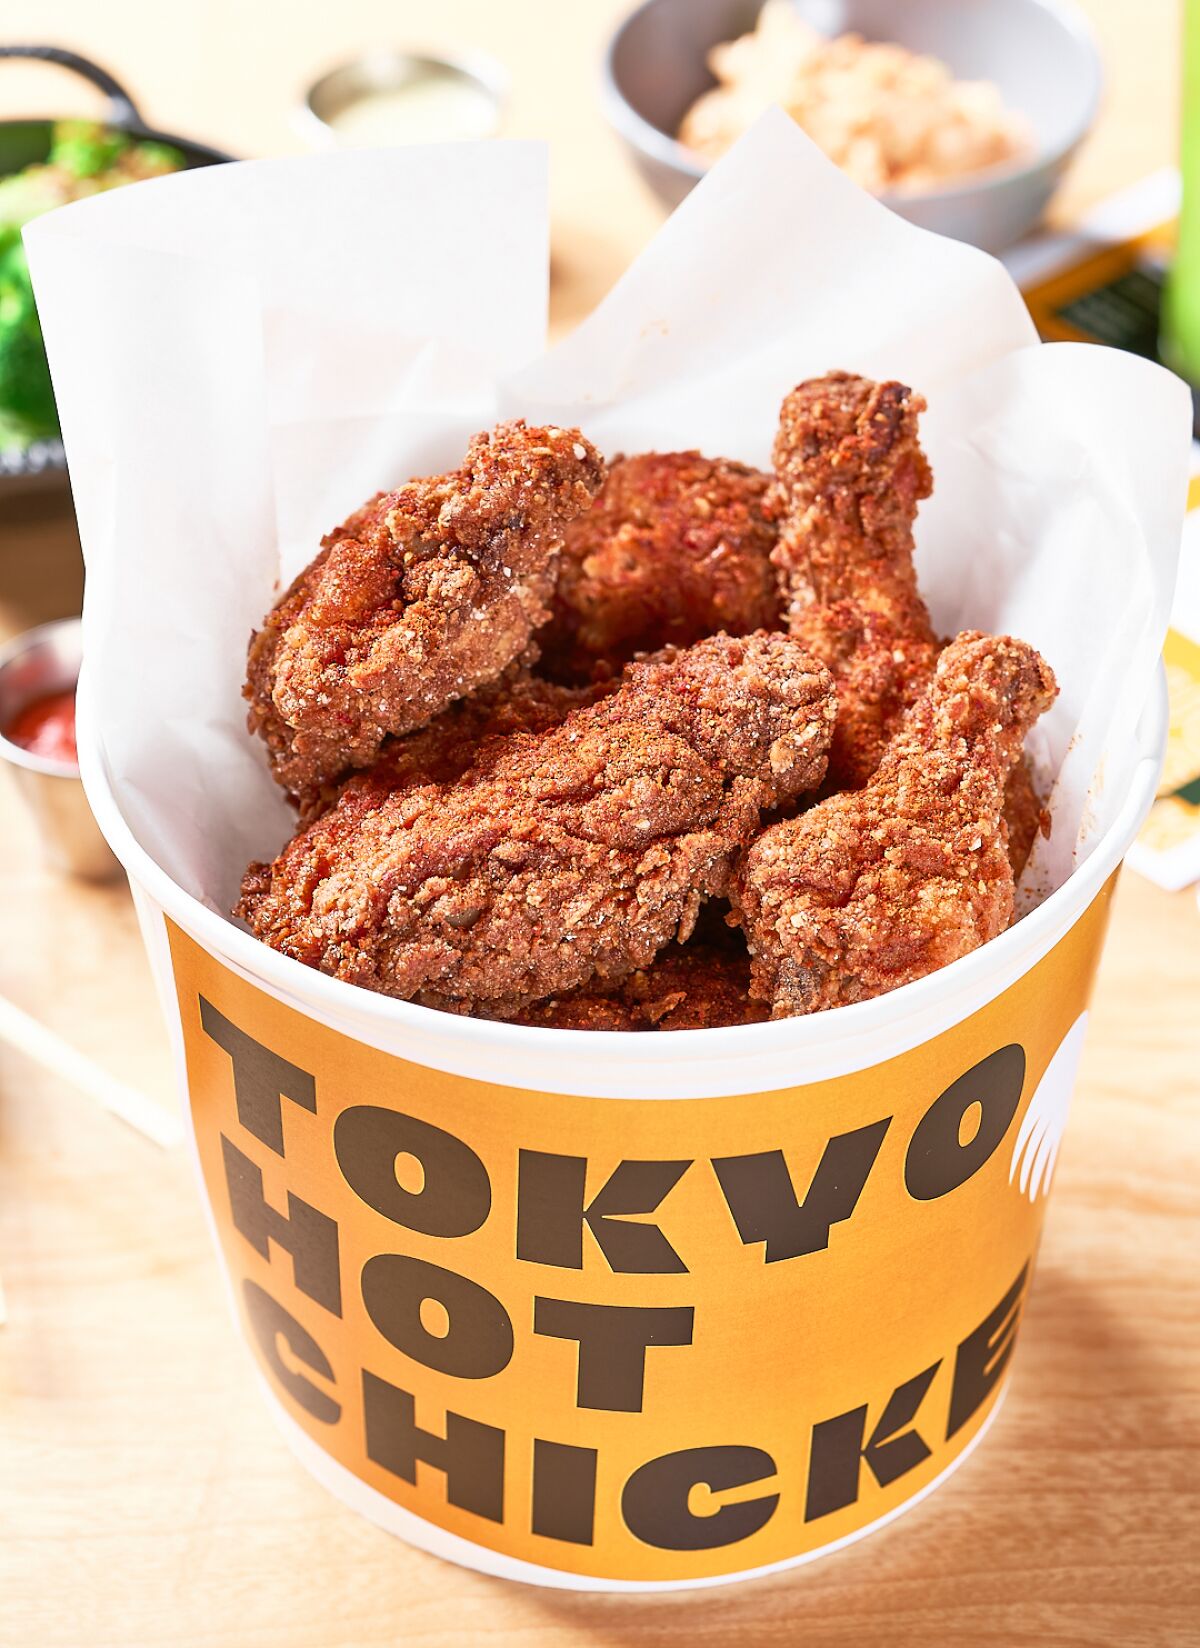 A bucket of chicken from Michael Mina's Tokyo Hot Chicken in Glendale.